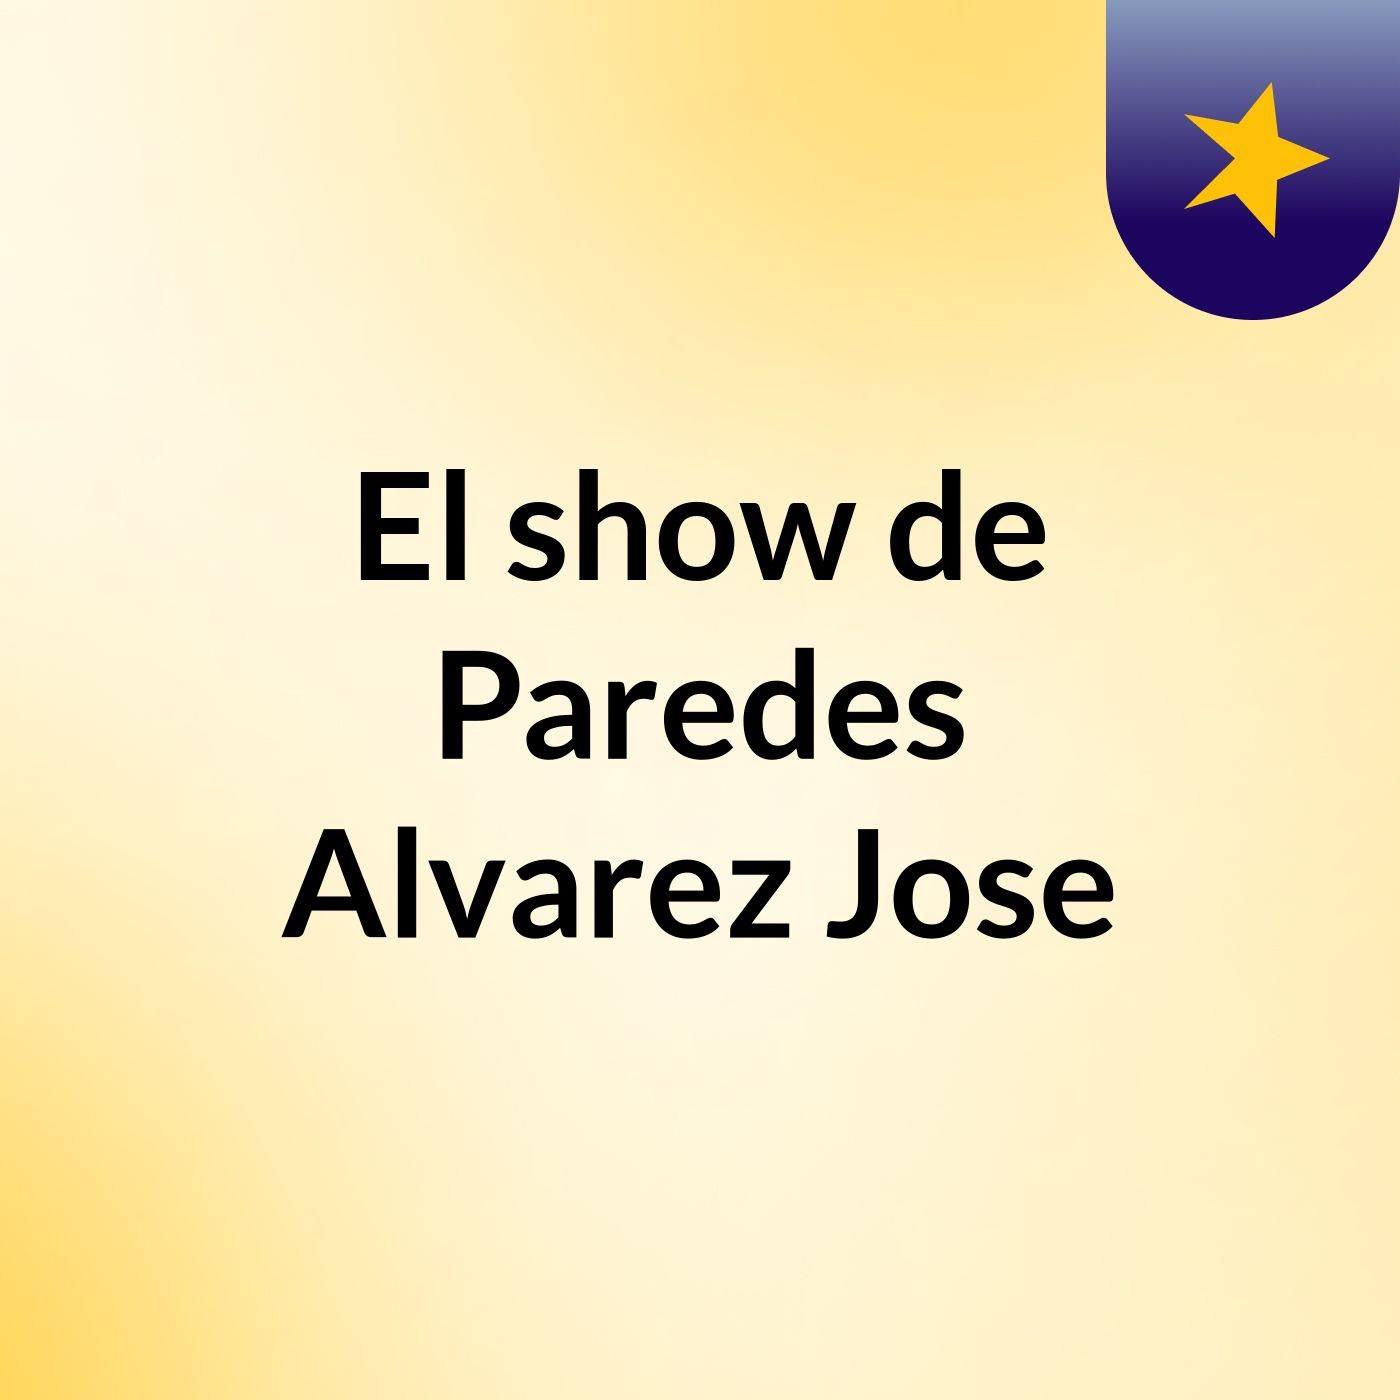 El show de Paredes Alvarez Jose